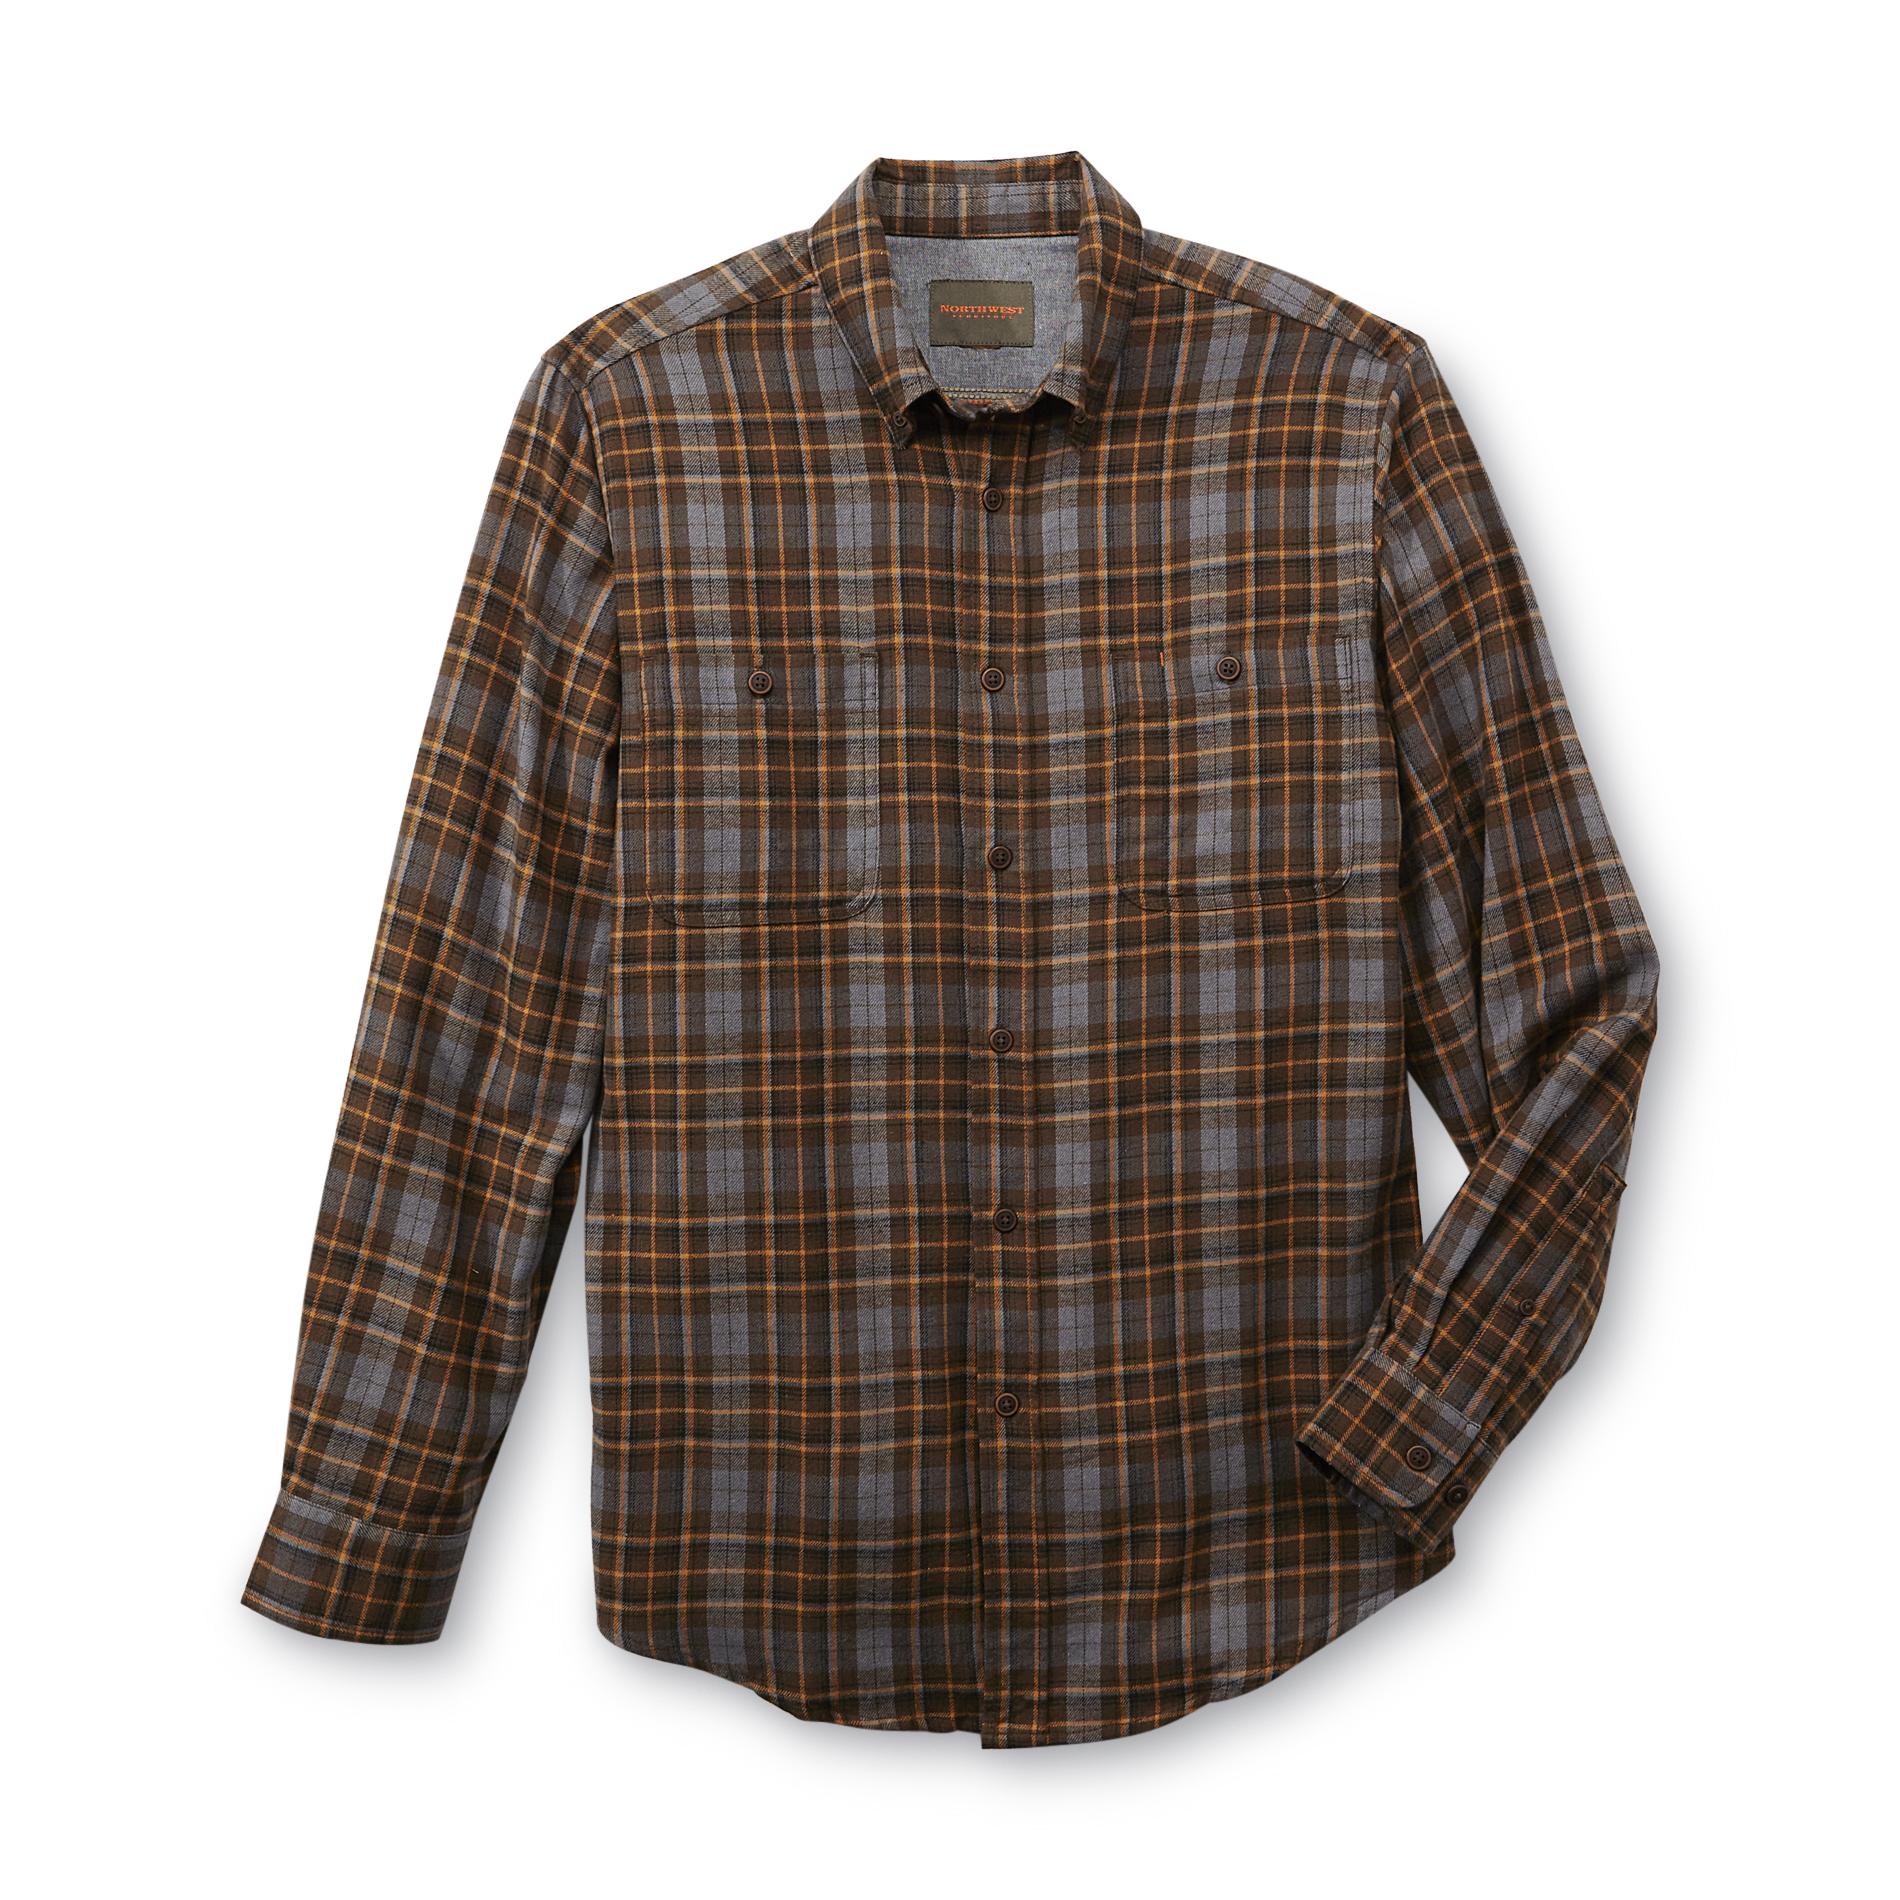 Northwest Territory Men's Long-Sleeve Flannel Shirt - Plaid